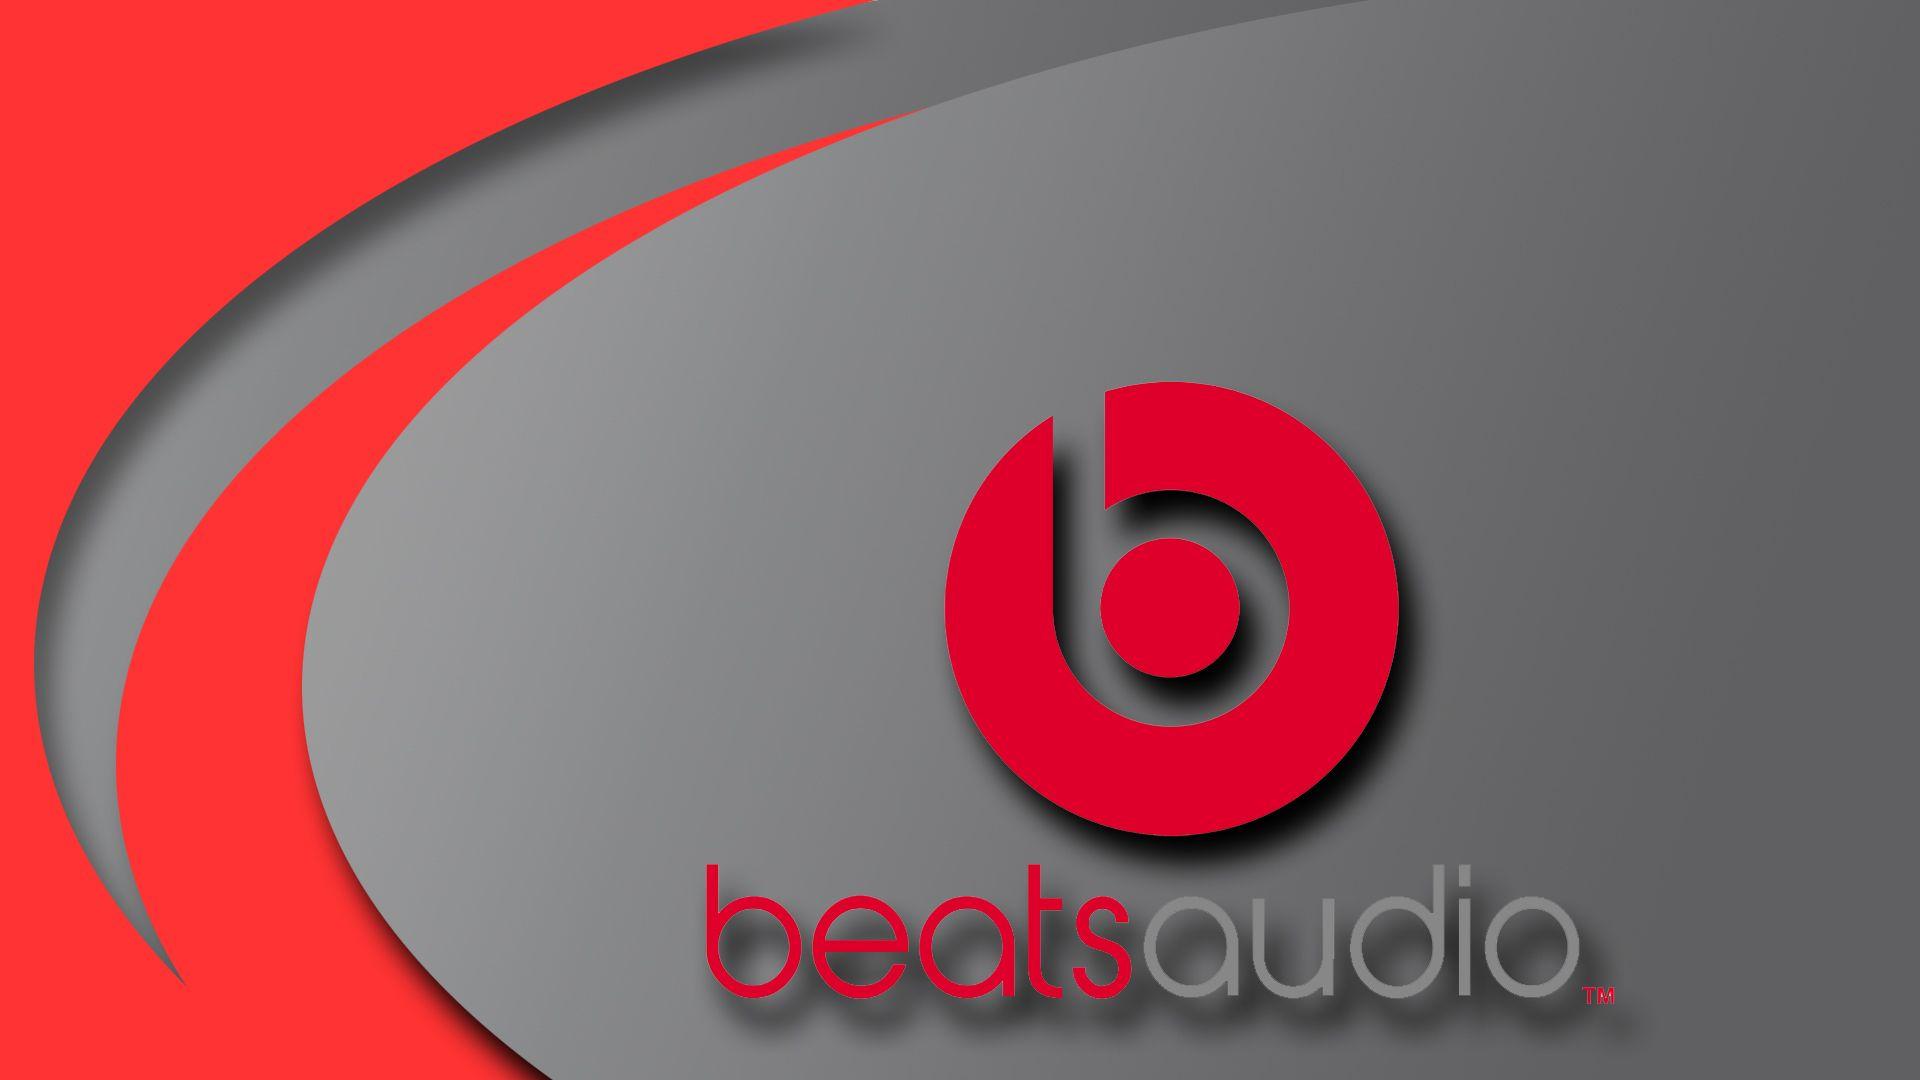 Beats Audio Pics, Top on 4USkY.com